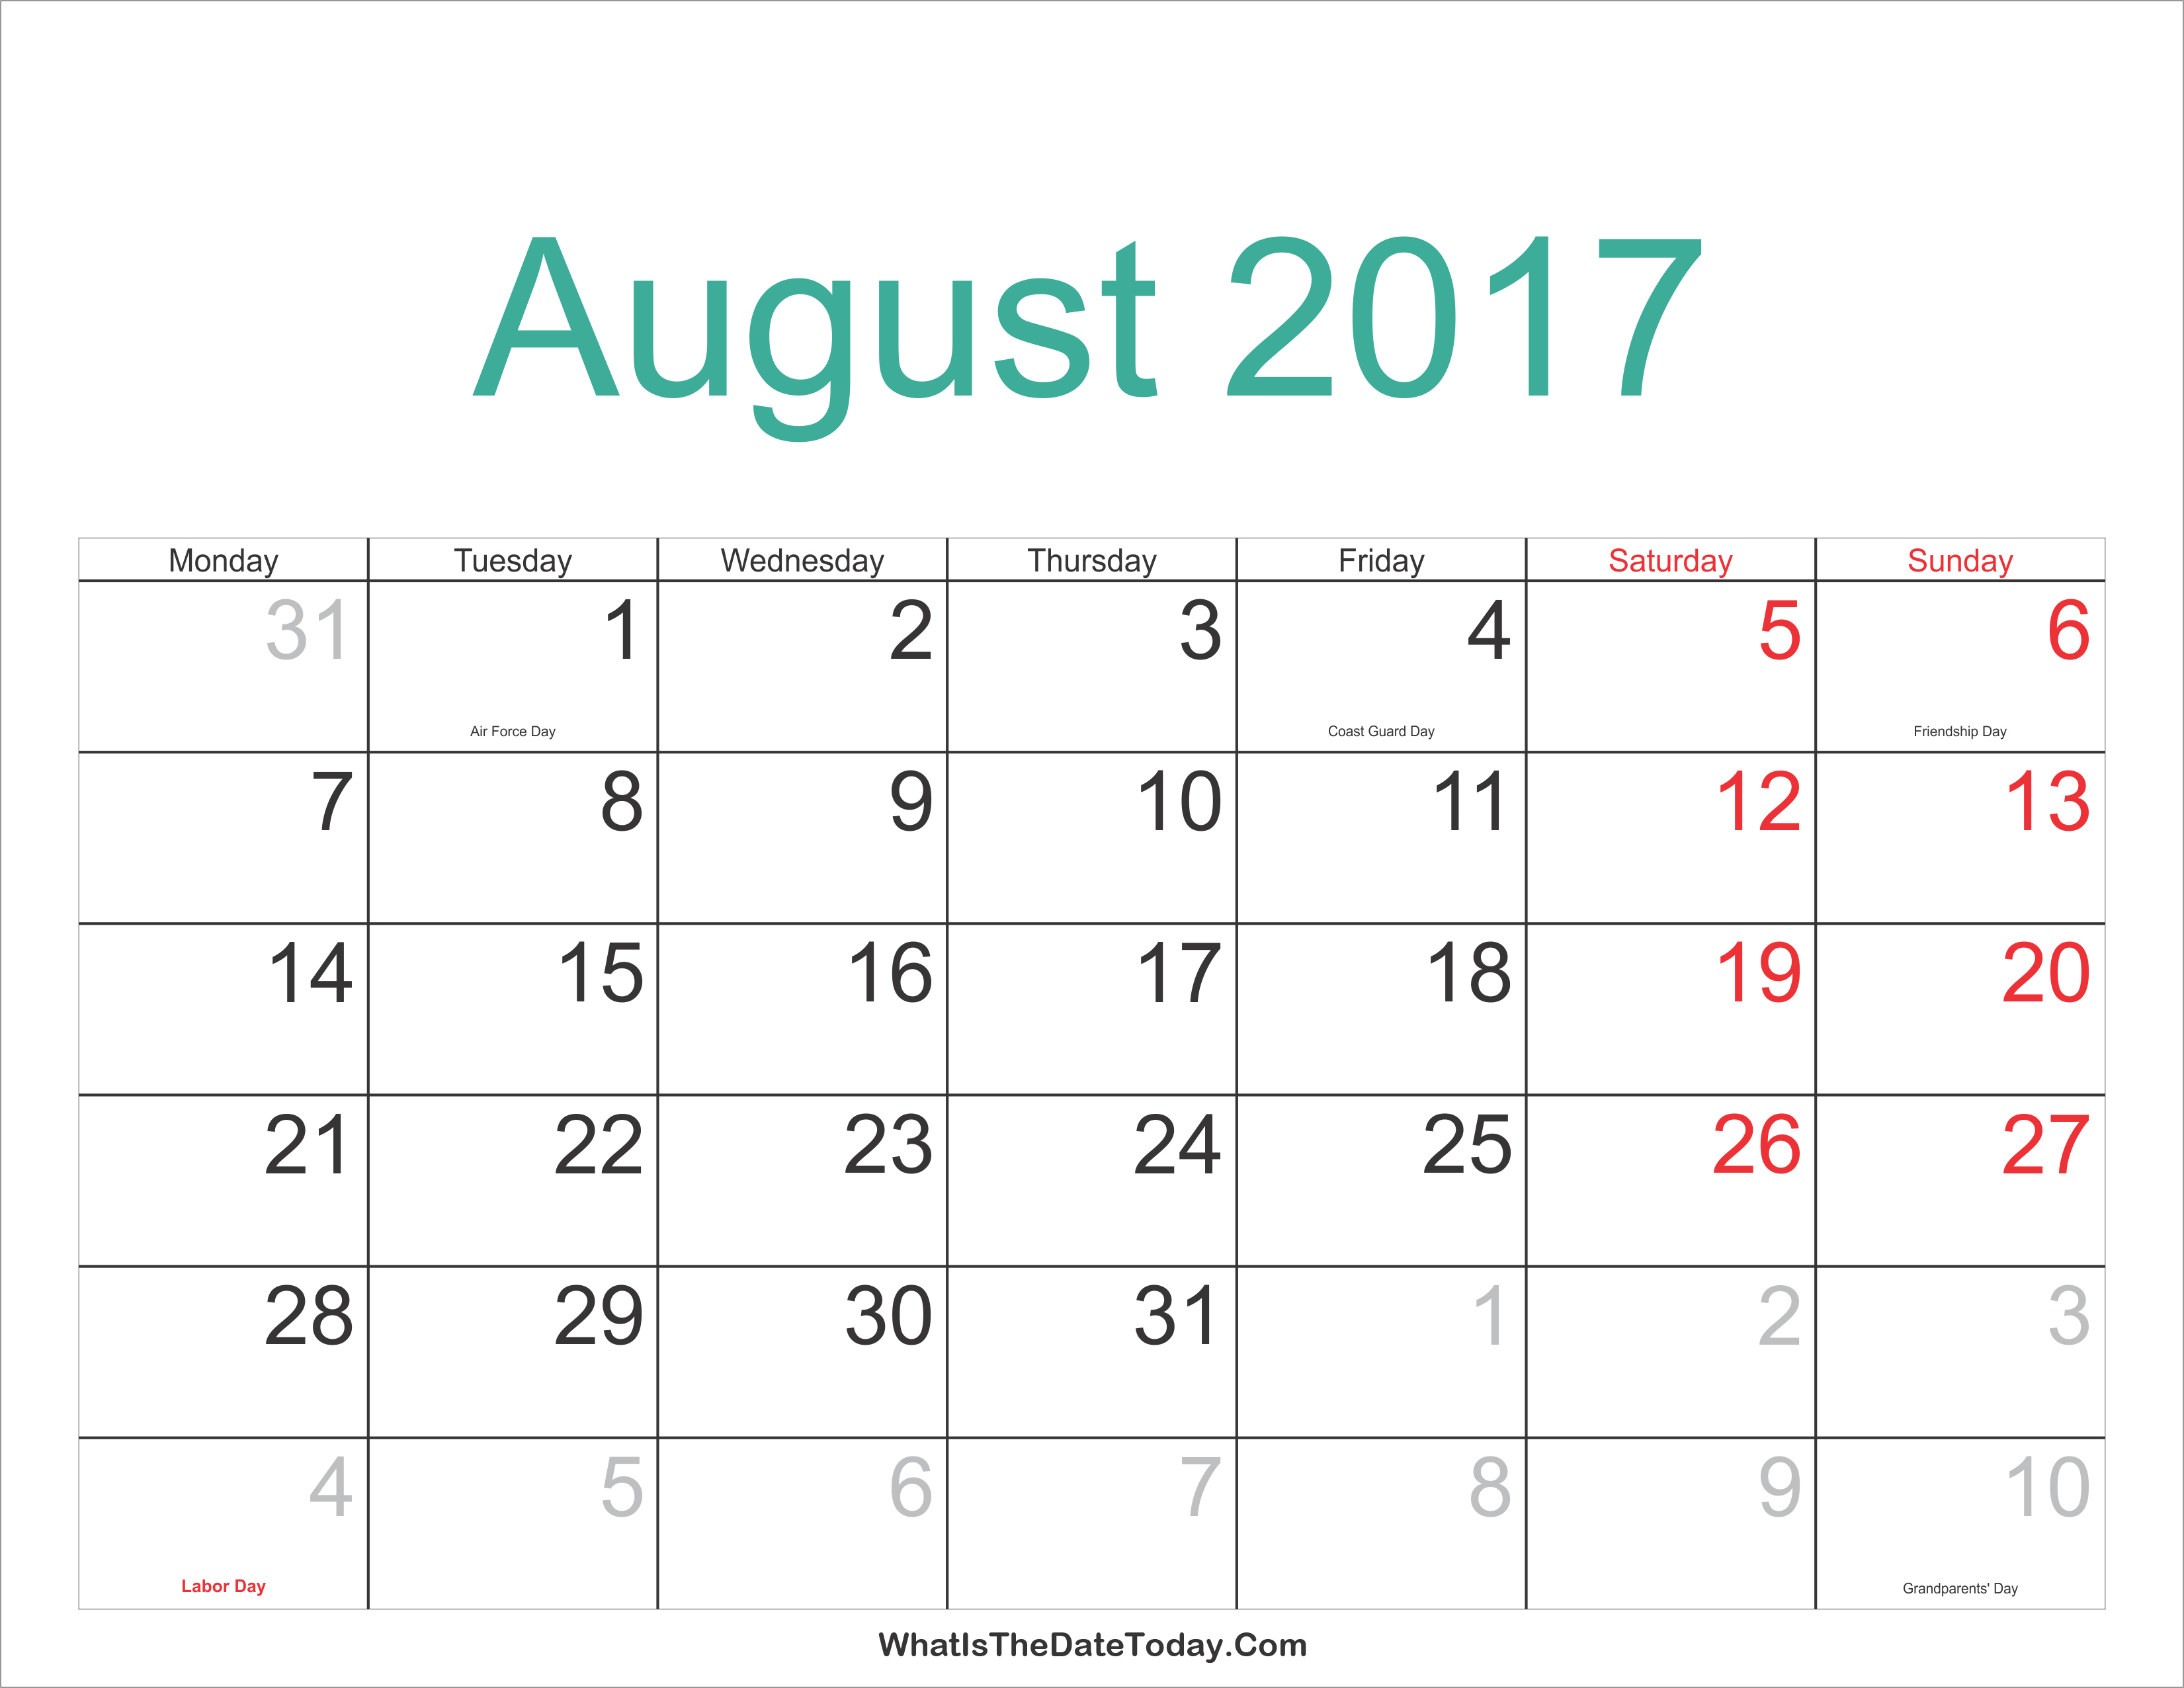 August 2017 Calendar Printable with Holidays Whatisthedatetoday Com